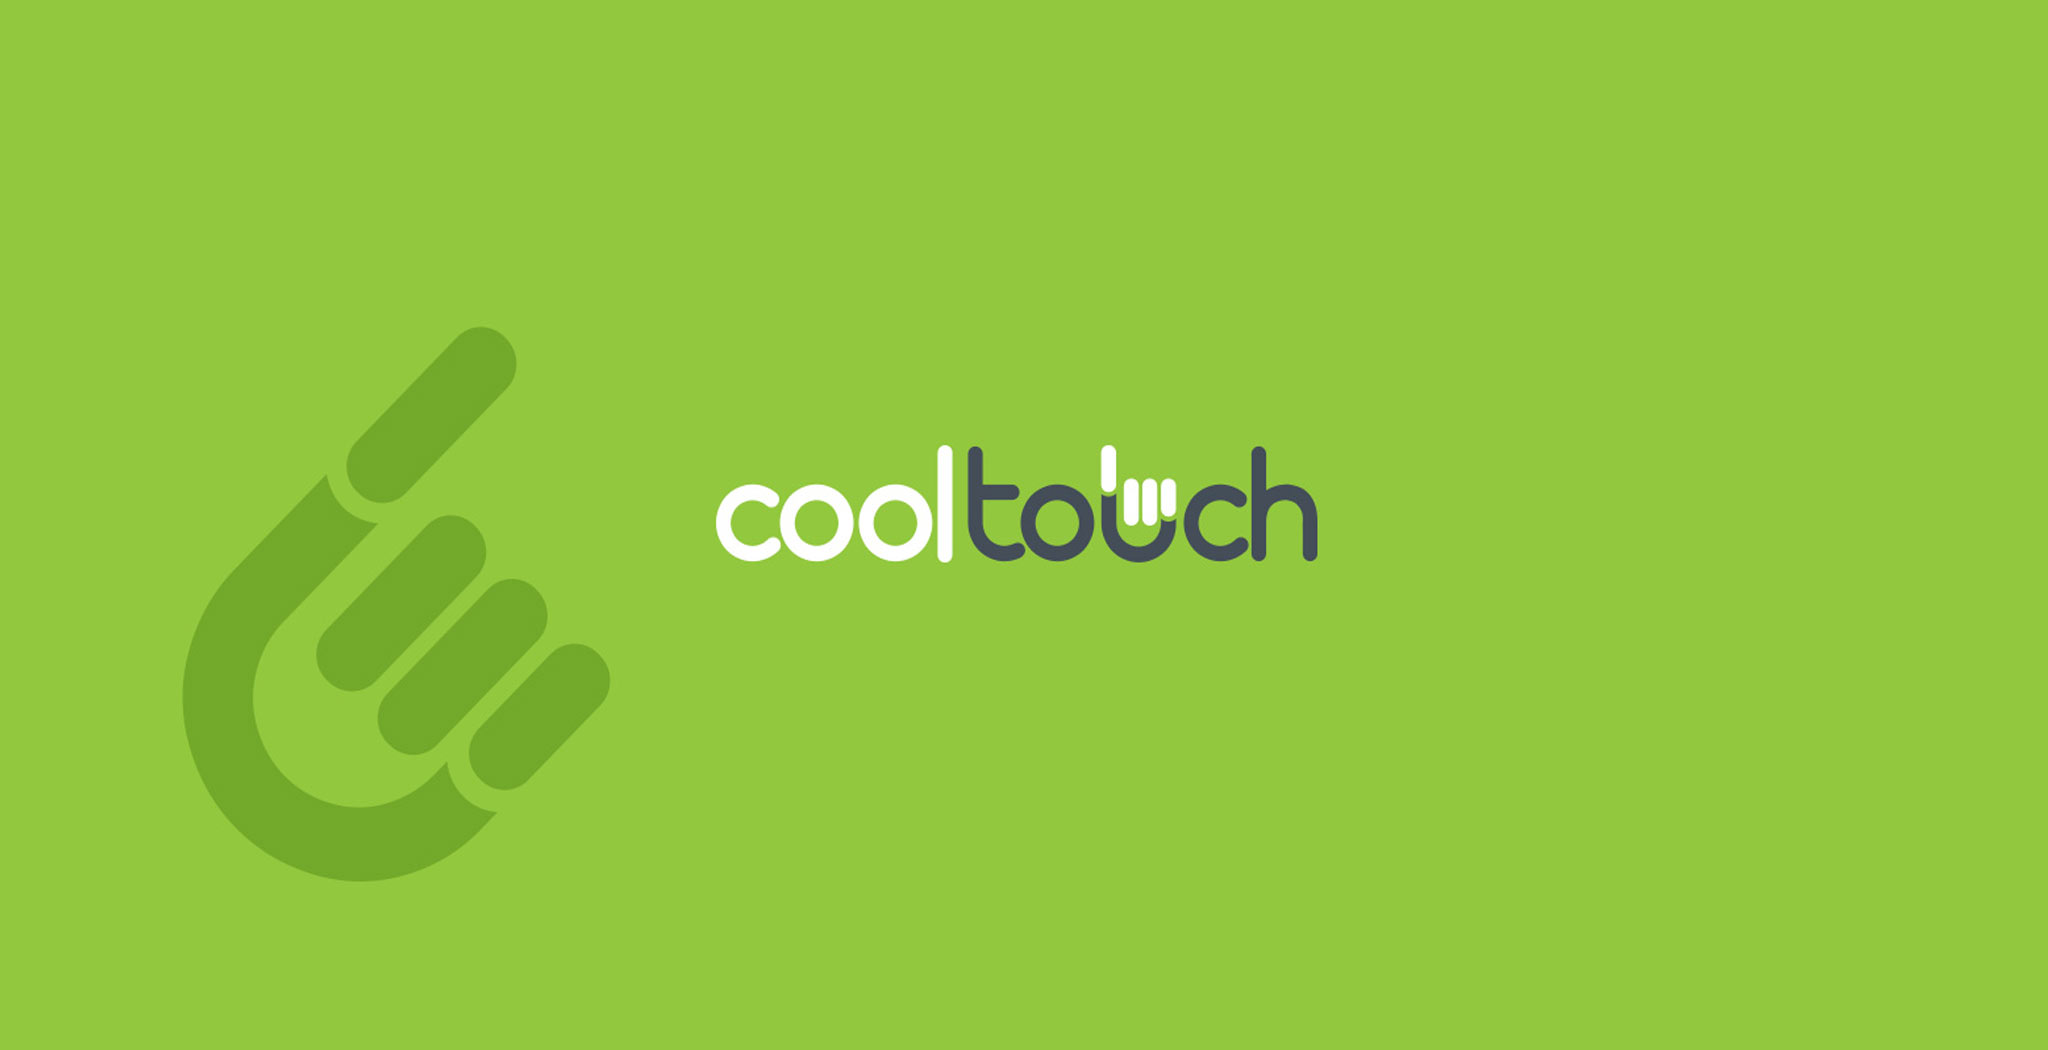 Cool Touch logo for design portfolio